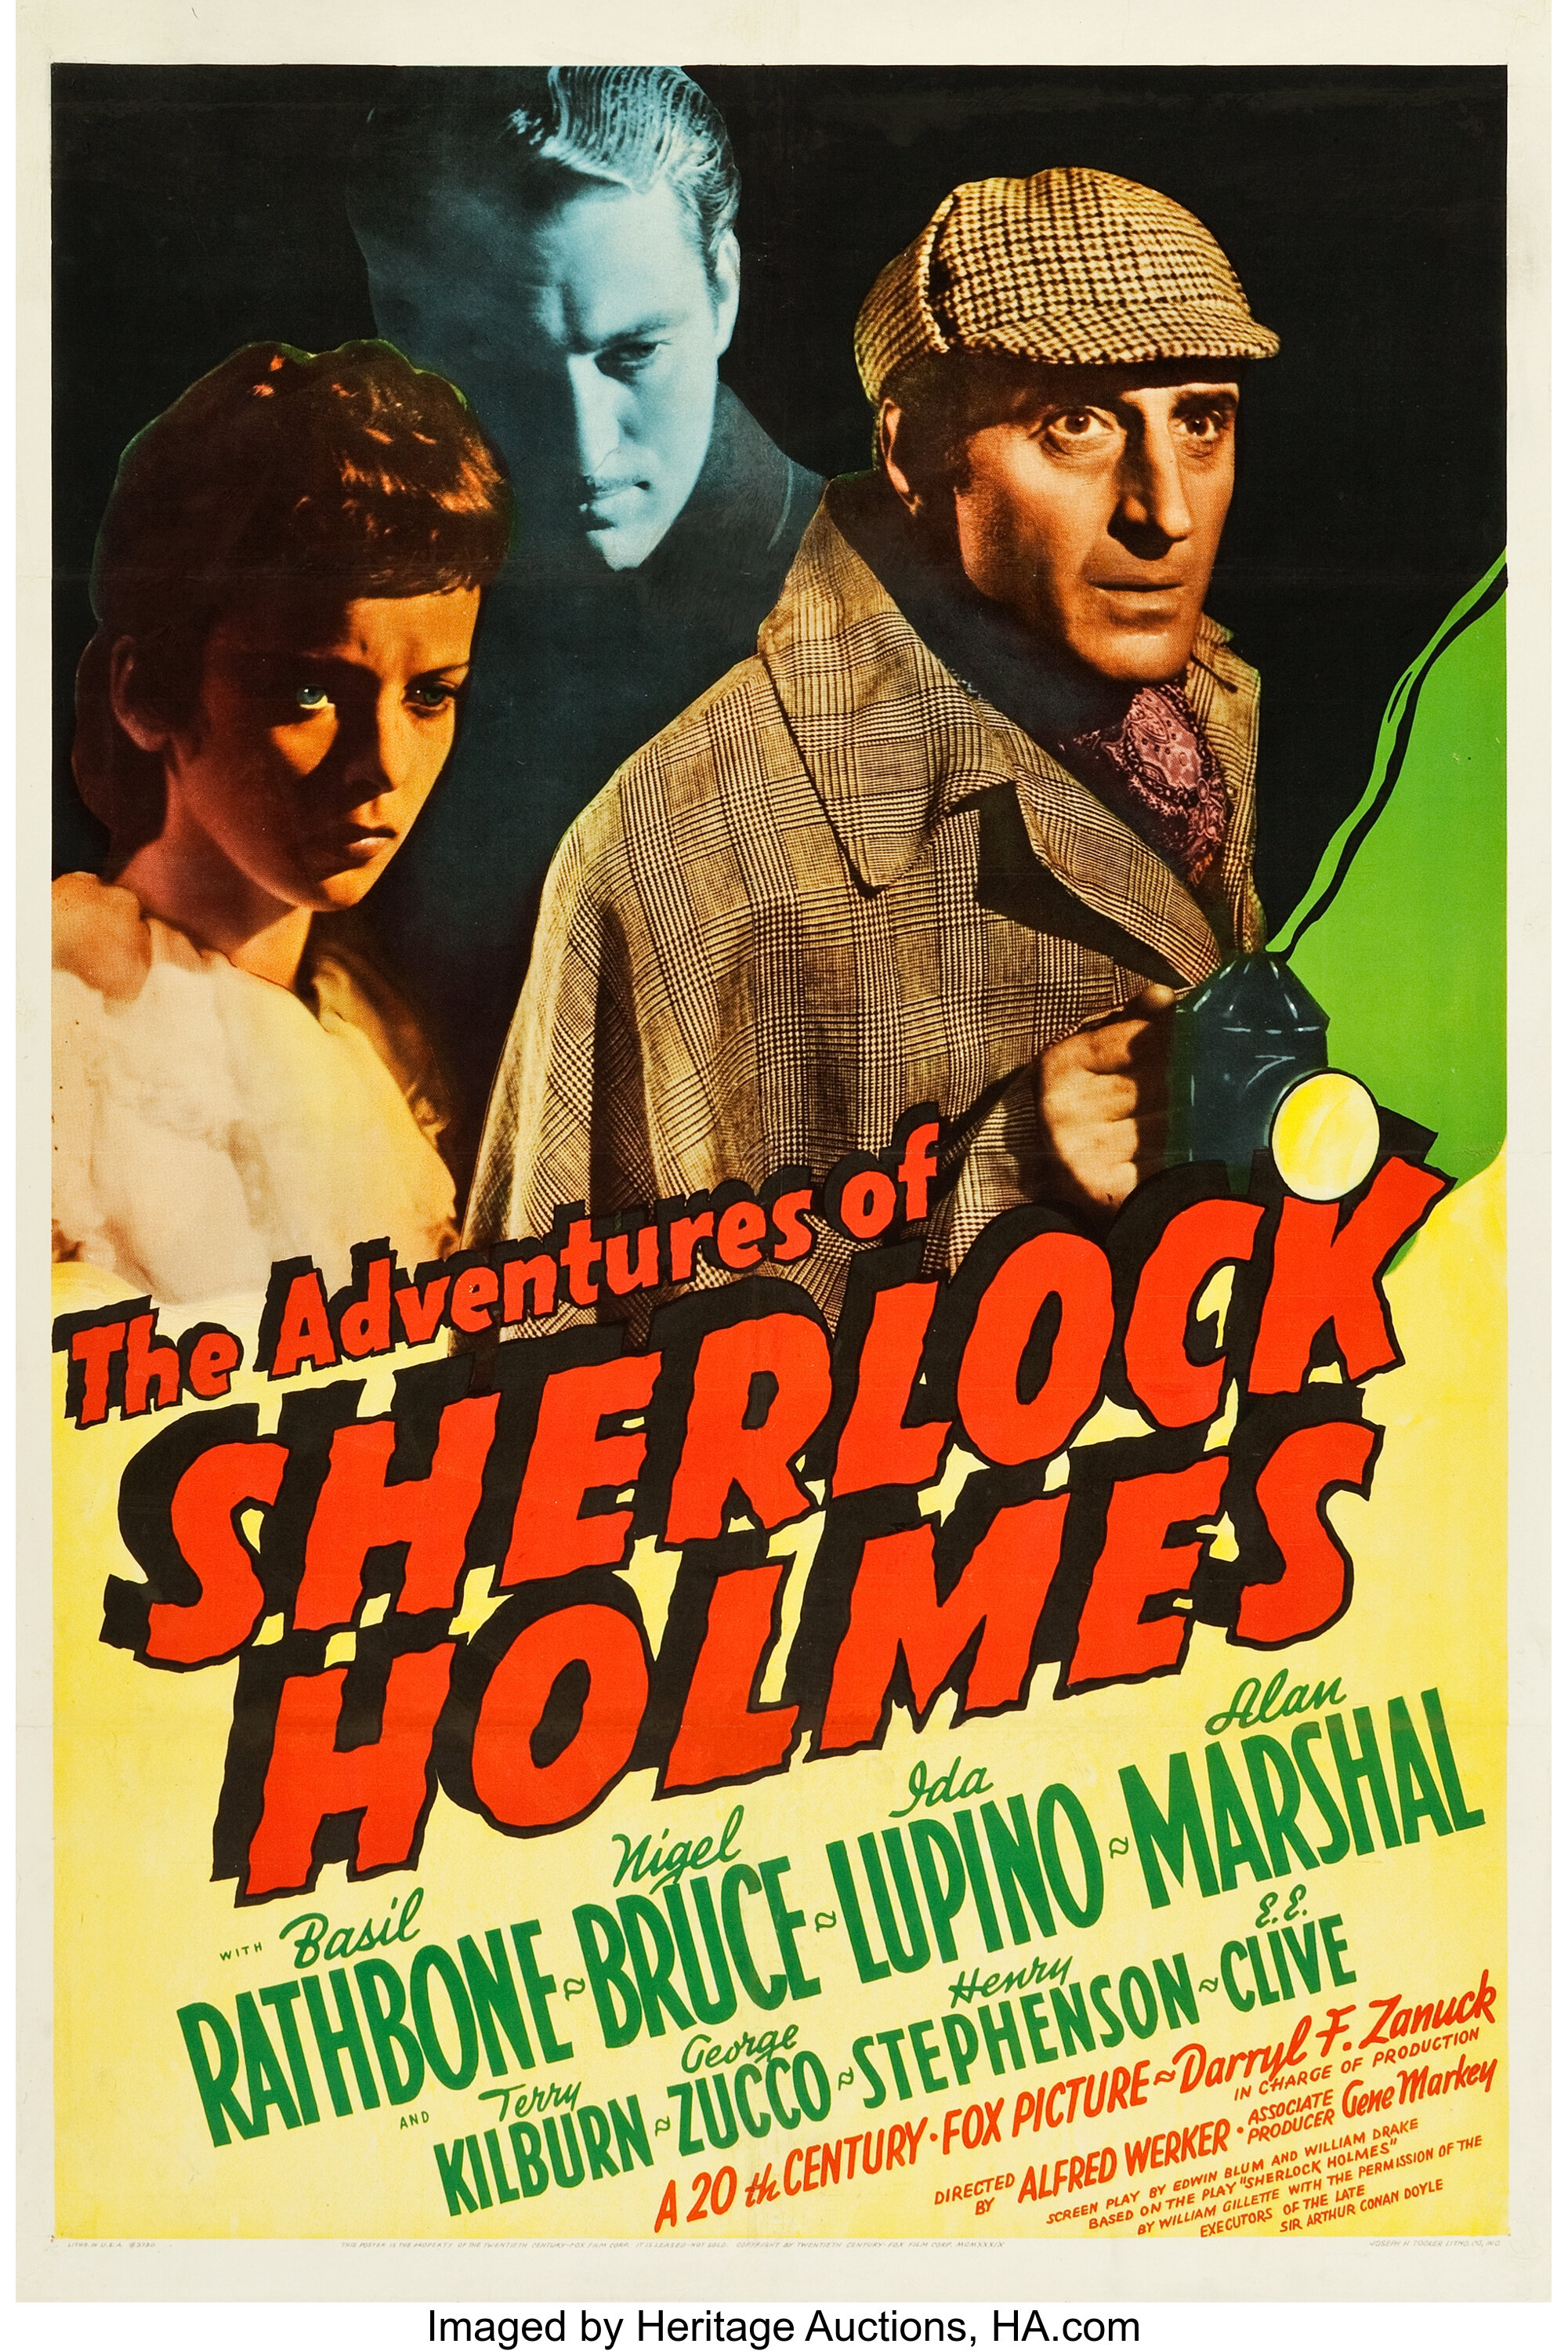 sherlock holmes movie poster